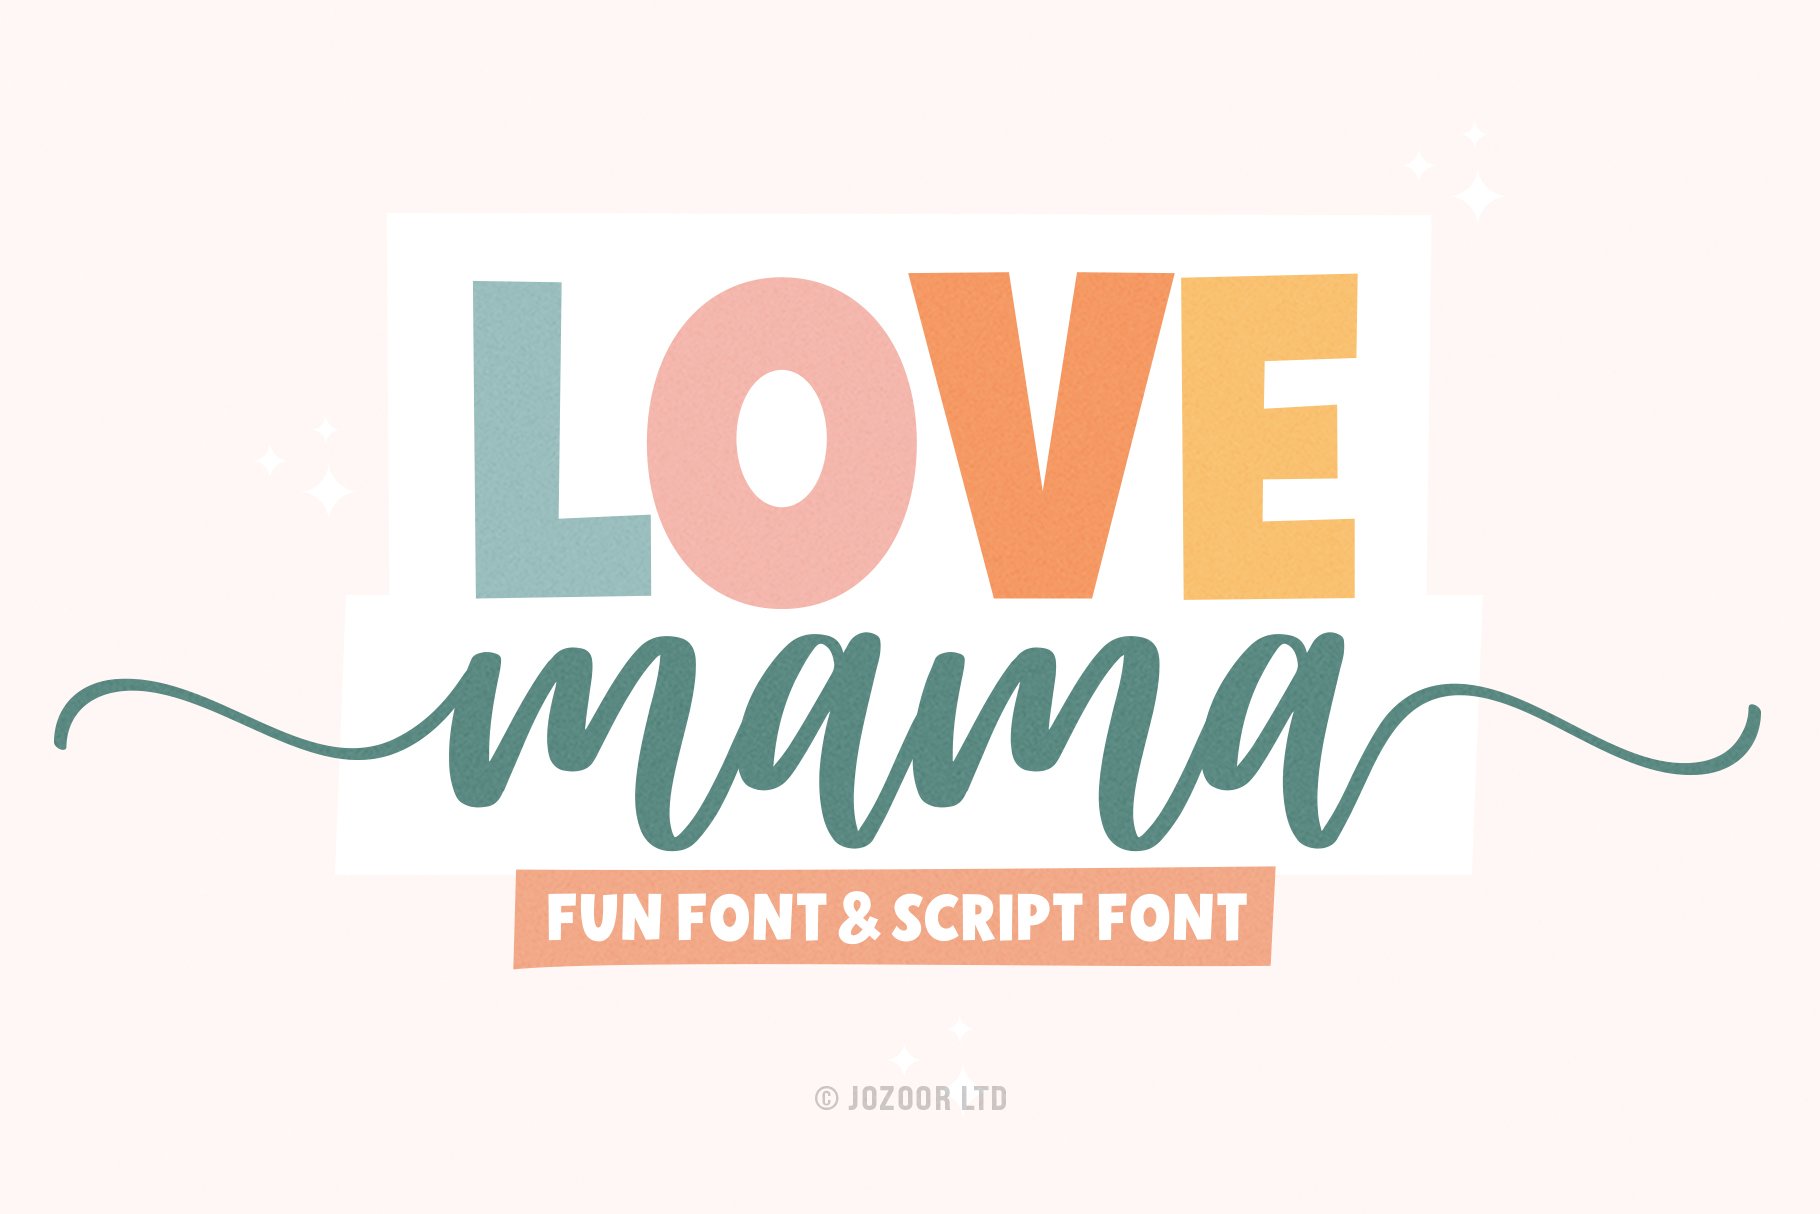 Love Mama - Script Font Duo cover image.